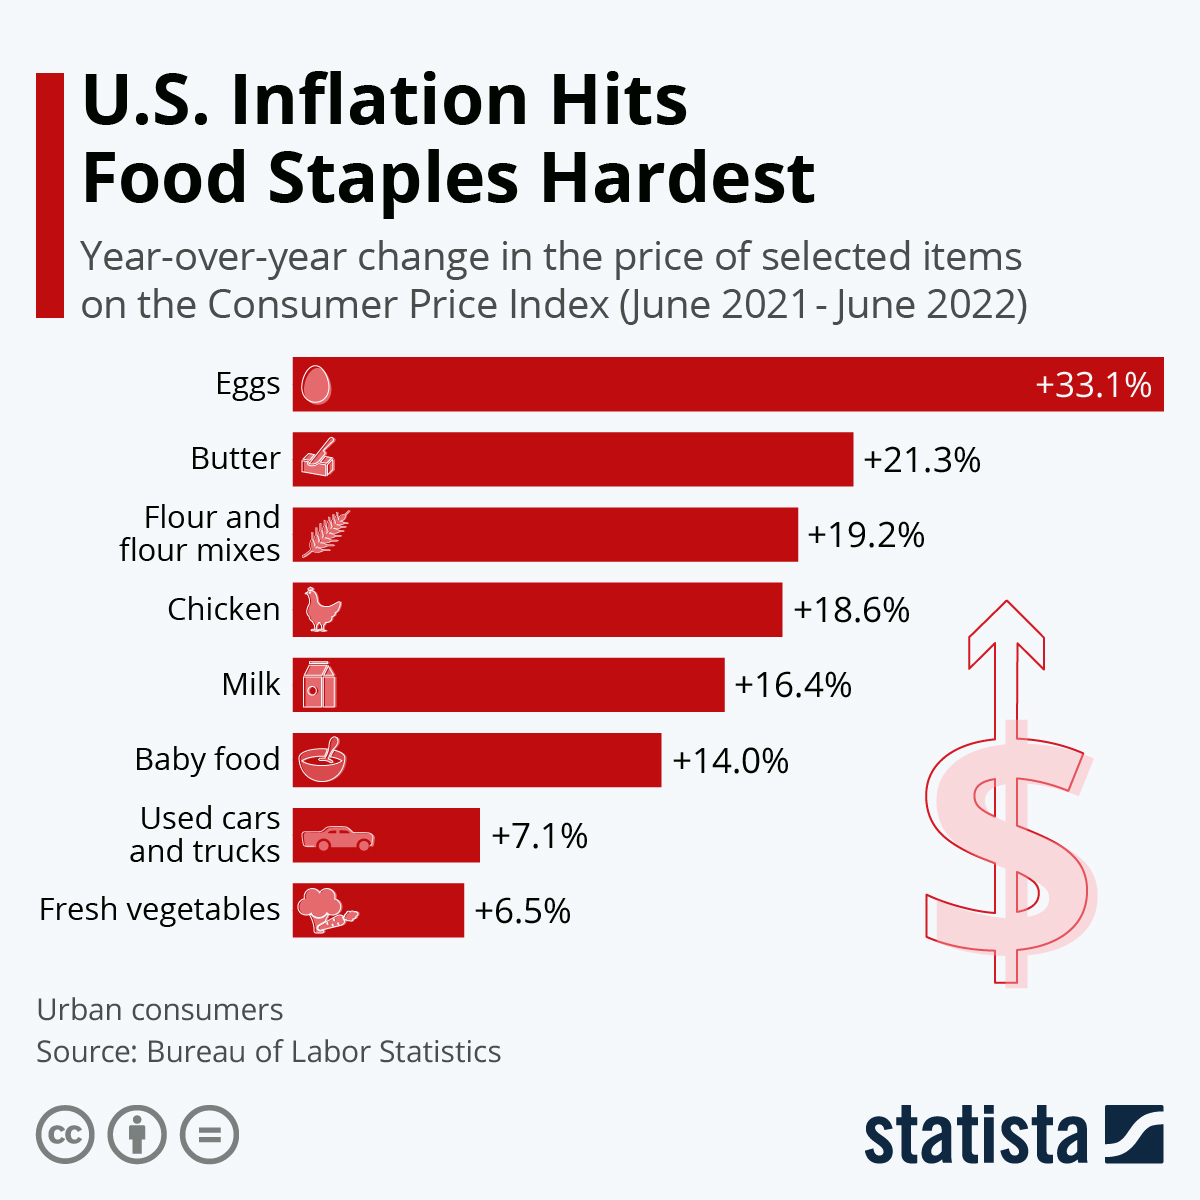 U.S. Inflation Hits Food Staples Hardest